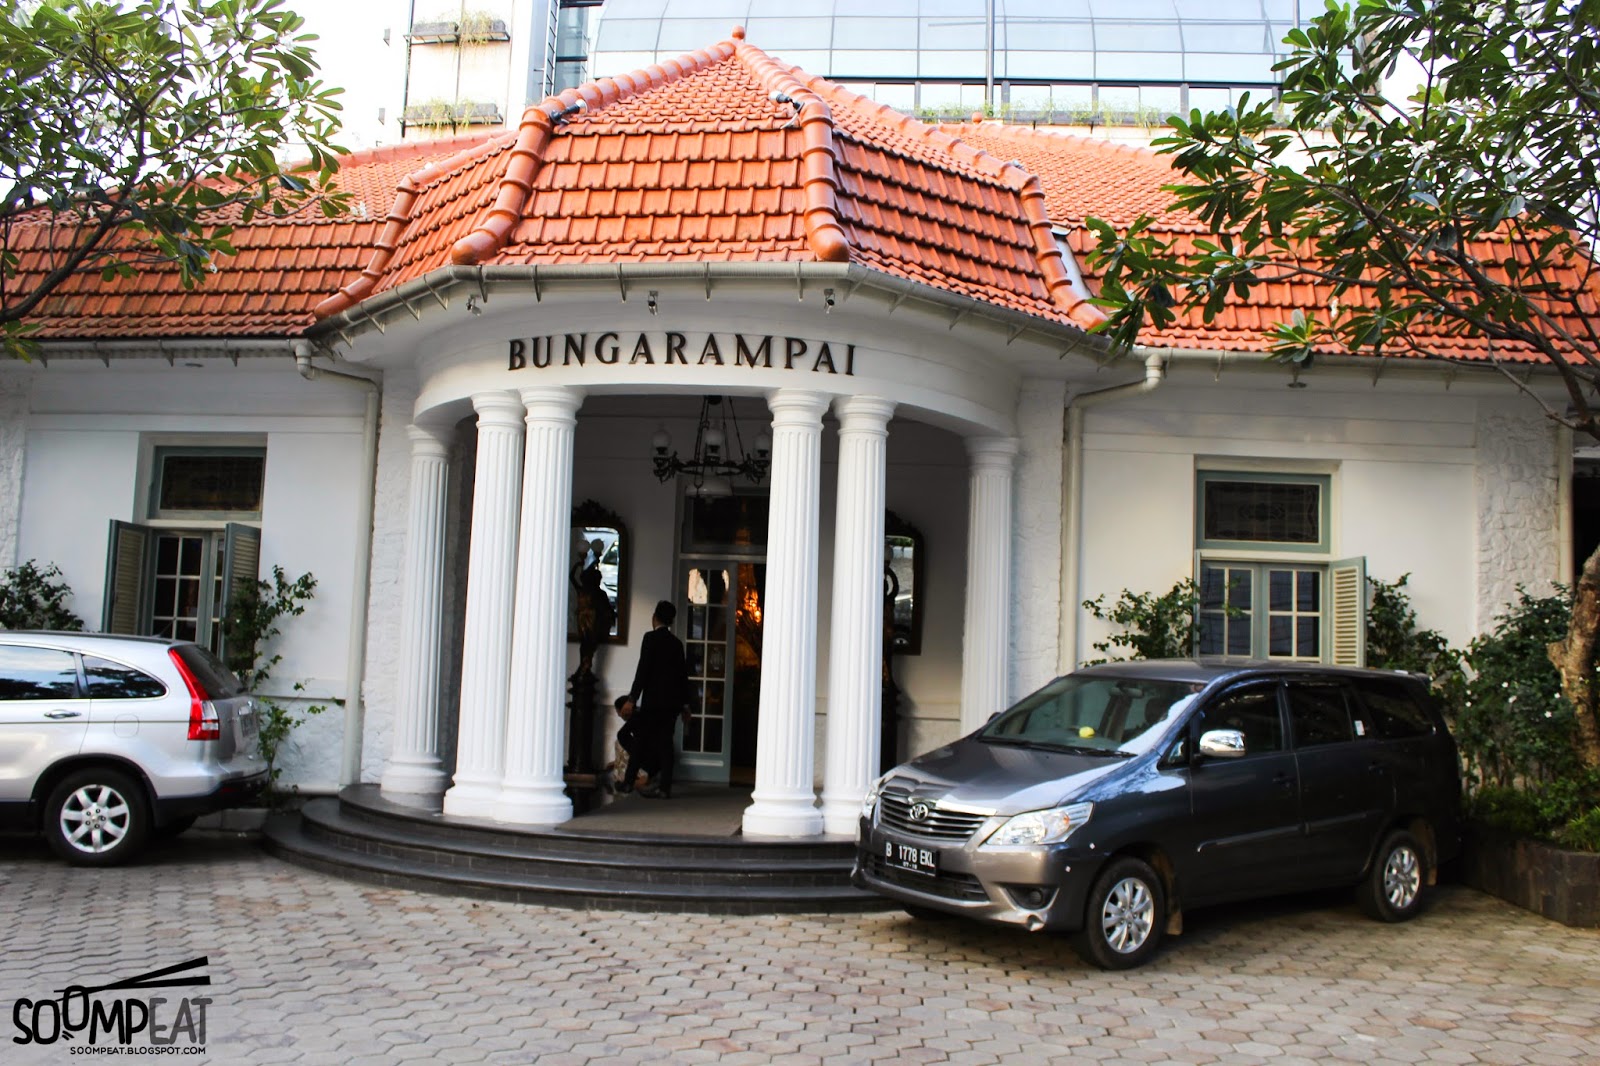  Bunga  Rampai  Restaurant Jakarta Foto Bugil Bokep 2021